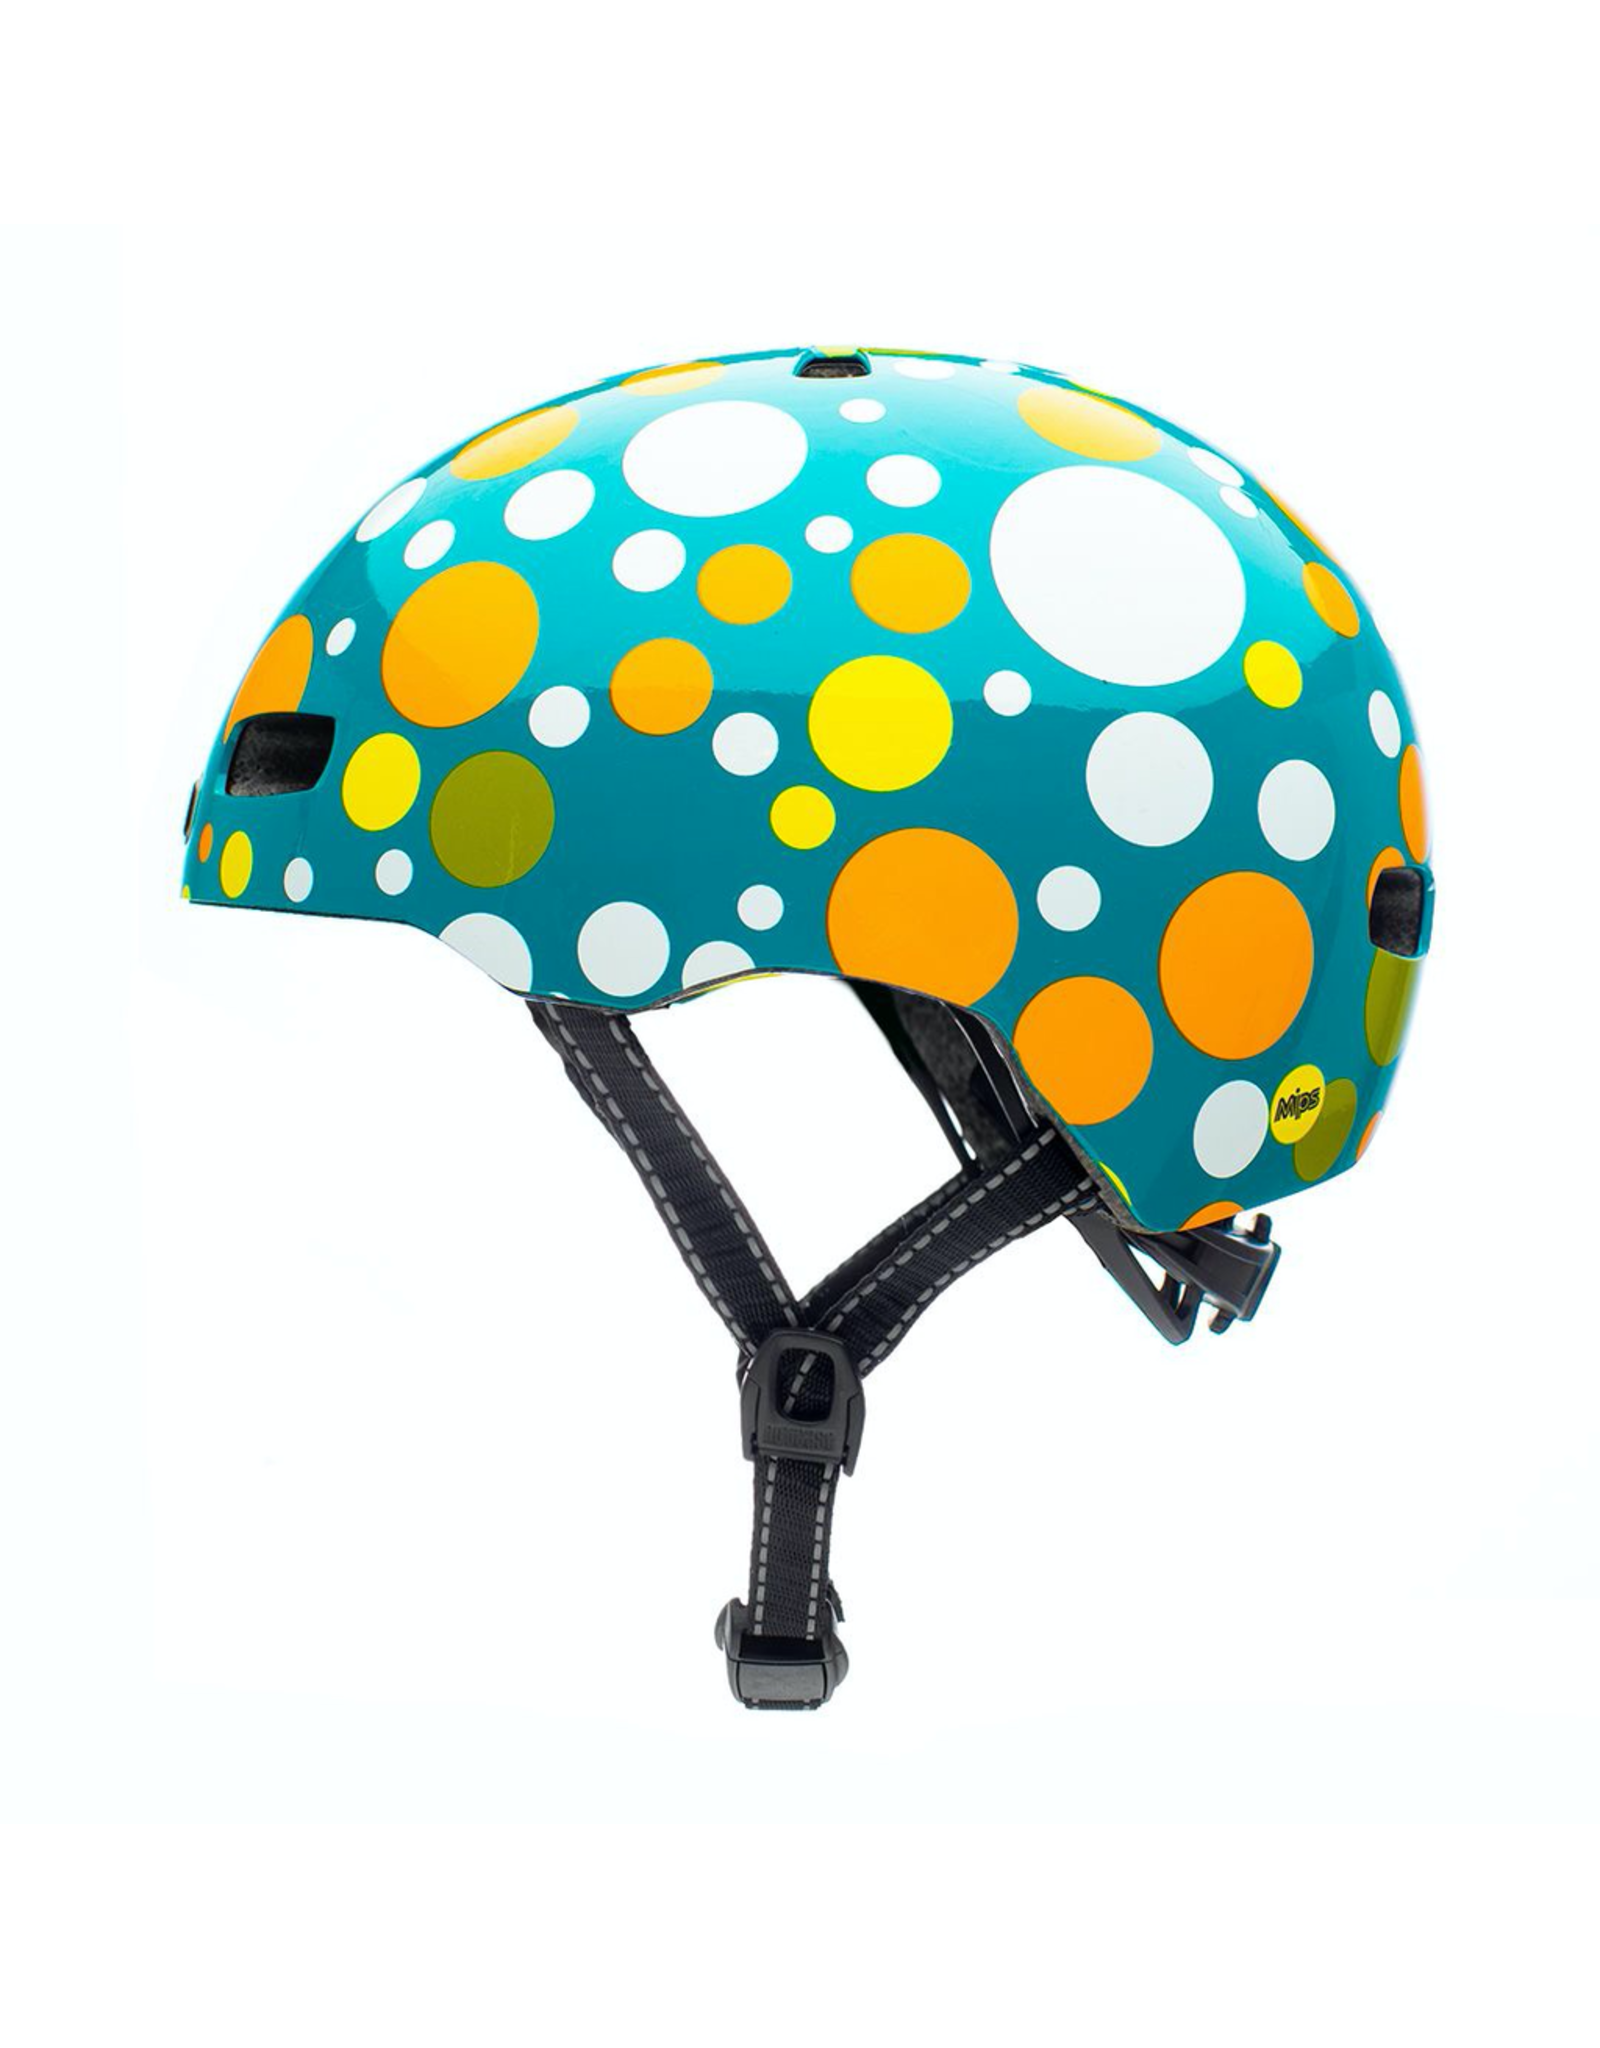 Nutcase Street Polka Face Gloss Mips Helmet L